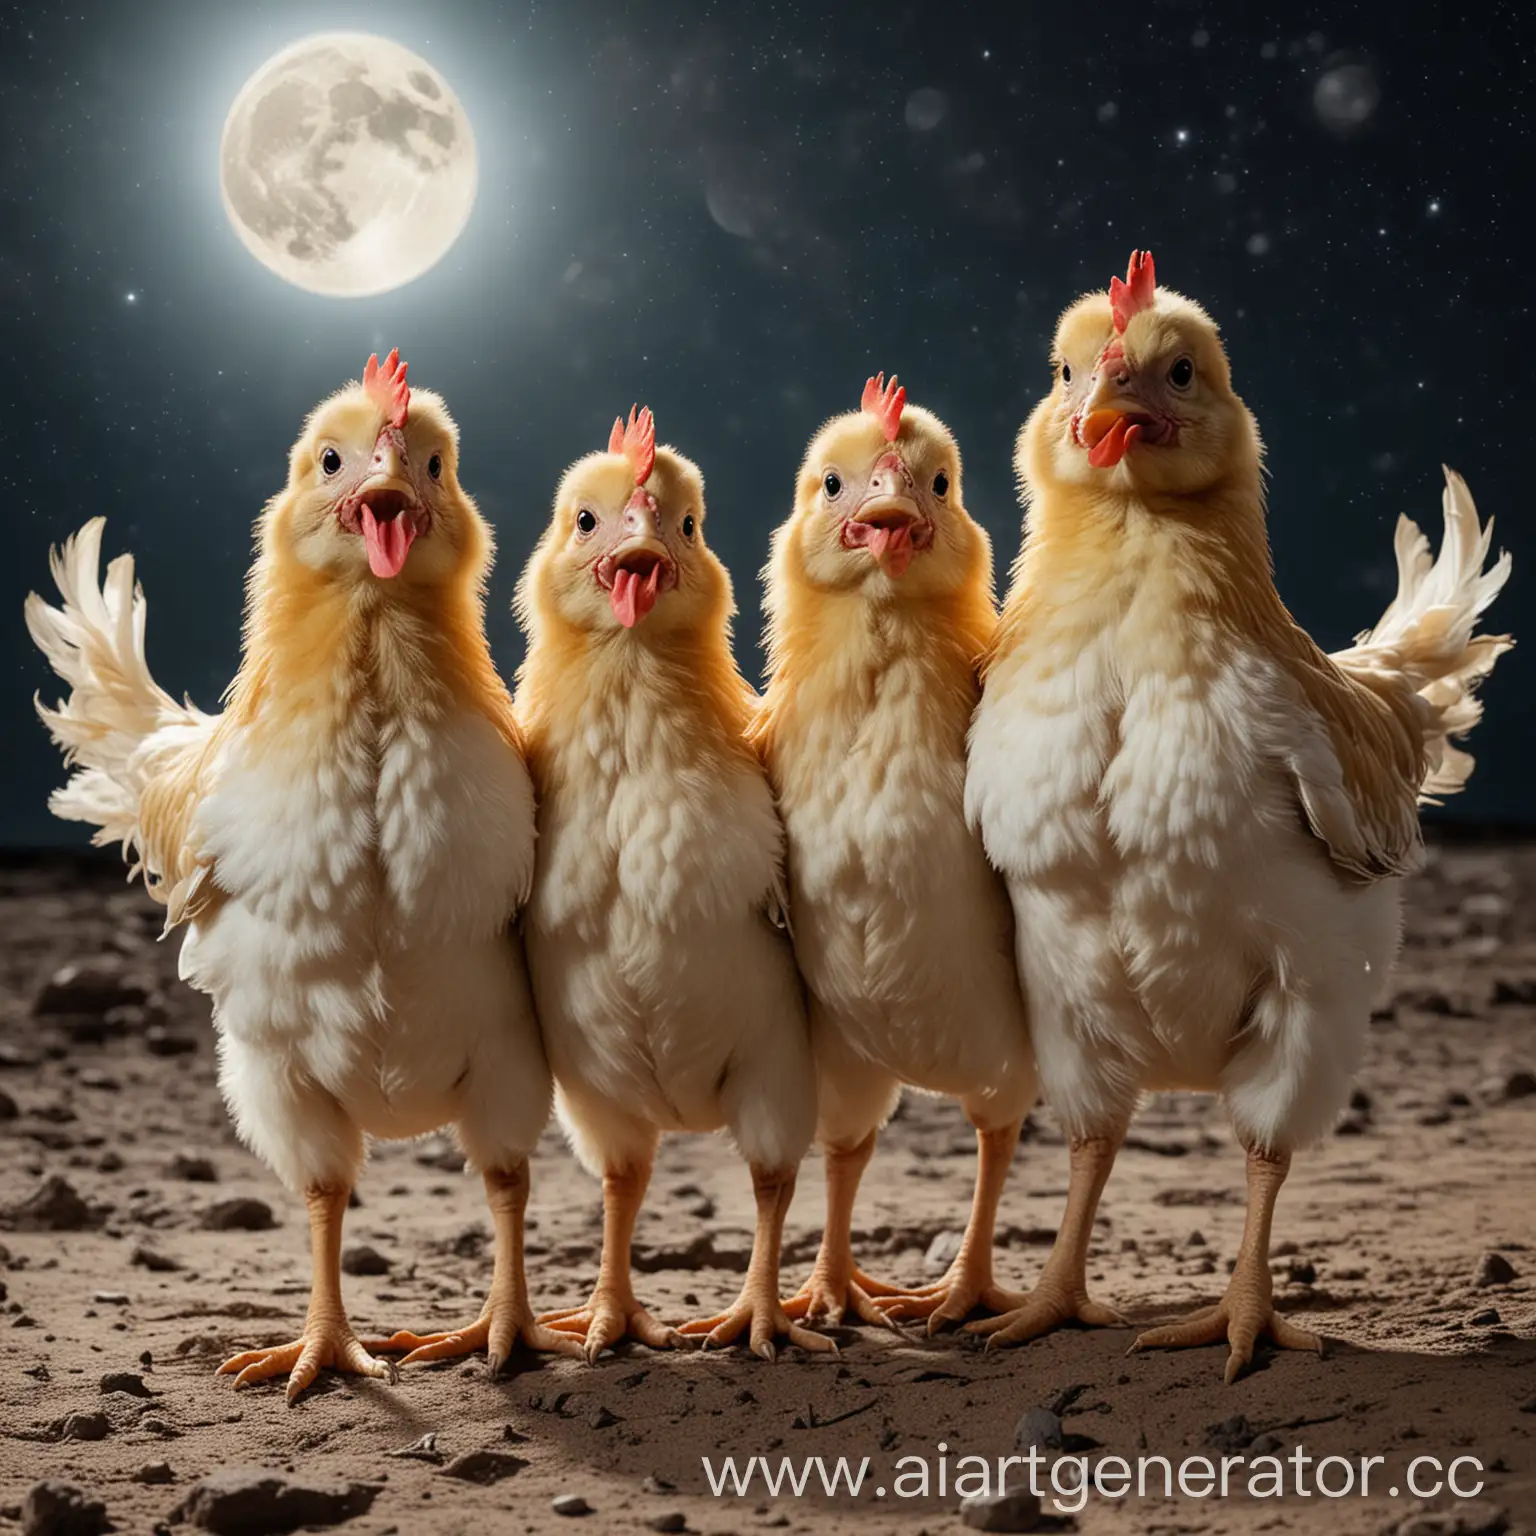 Adventurous-Little-Chickens-Dreaming-of-Lunar-Flight